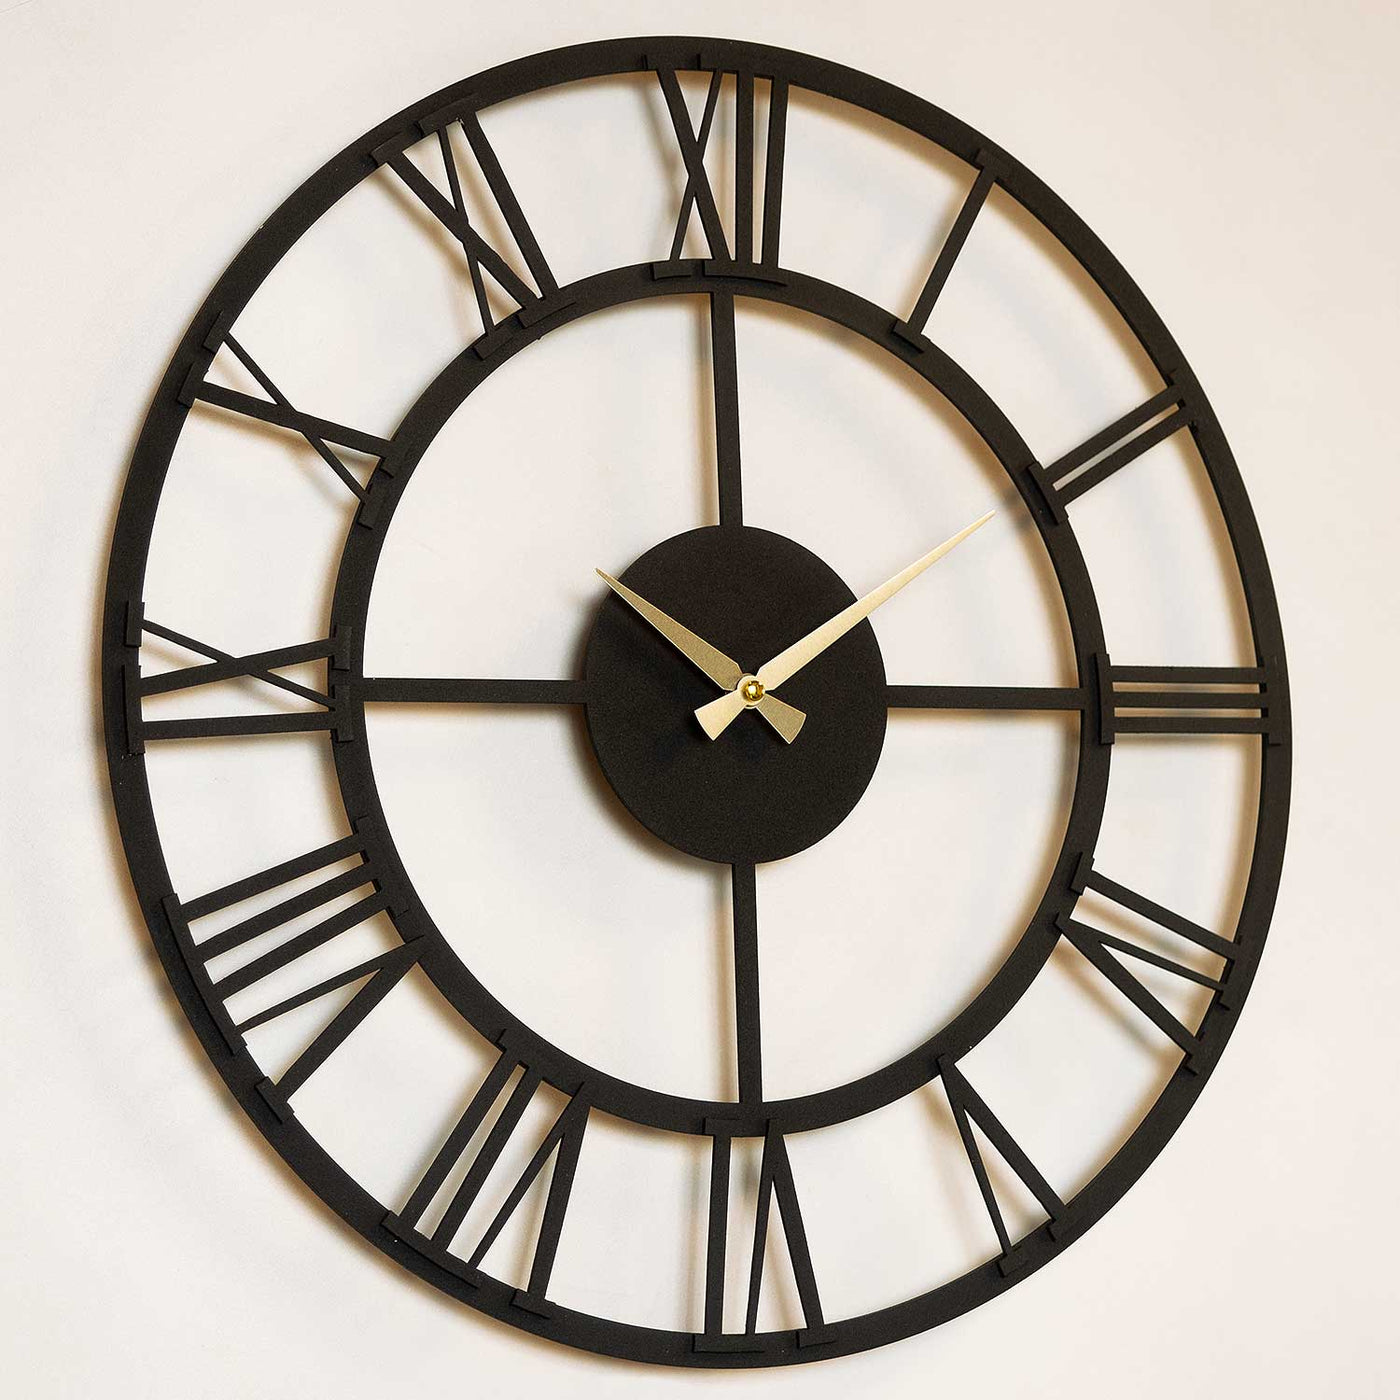 Roman, Metal Wall Clock, Modern Design, Decoration Ideas, Perfect Gift, Roman Numerals